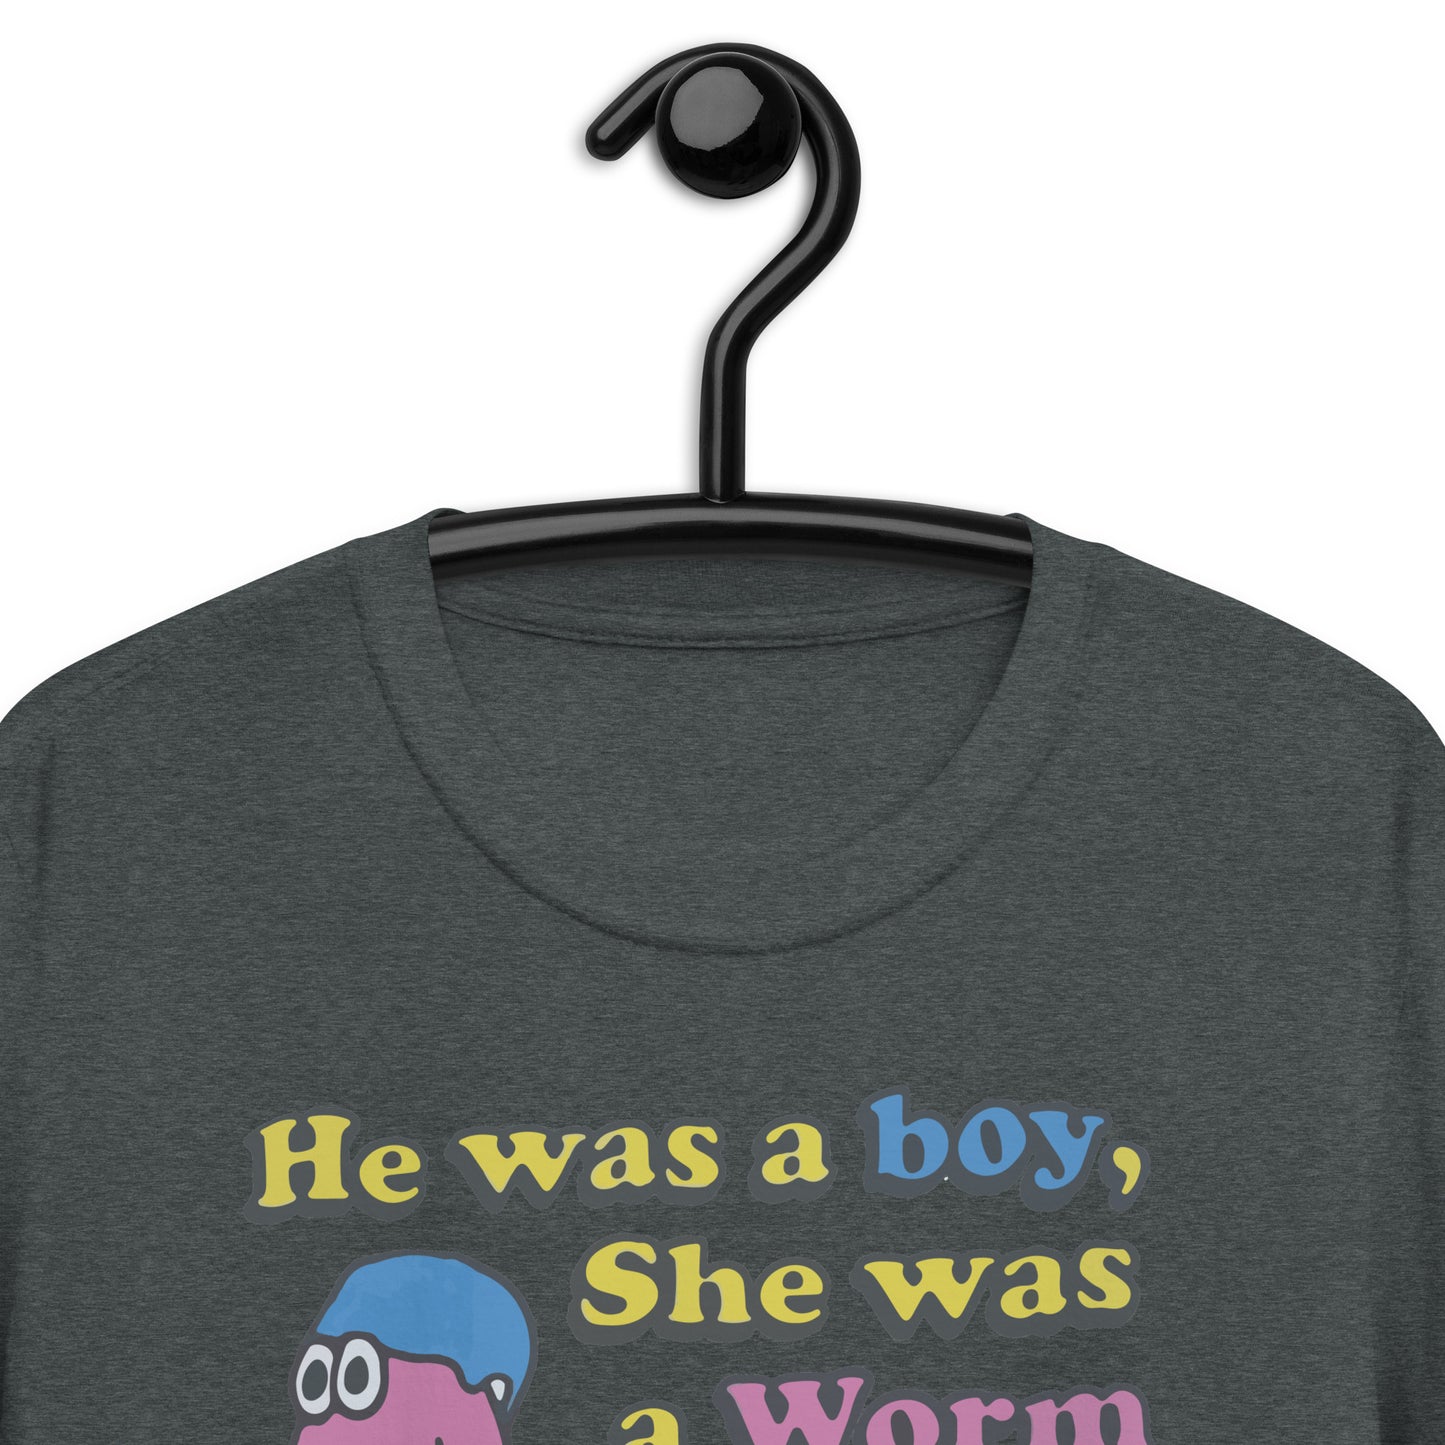 Él era un niño, ella era un gusano. Camiseta unisex